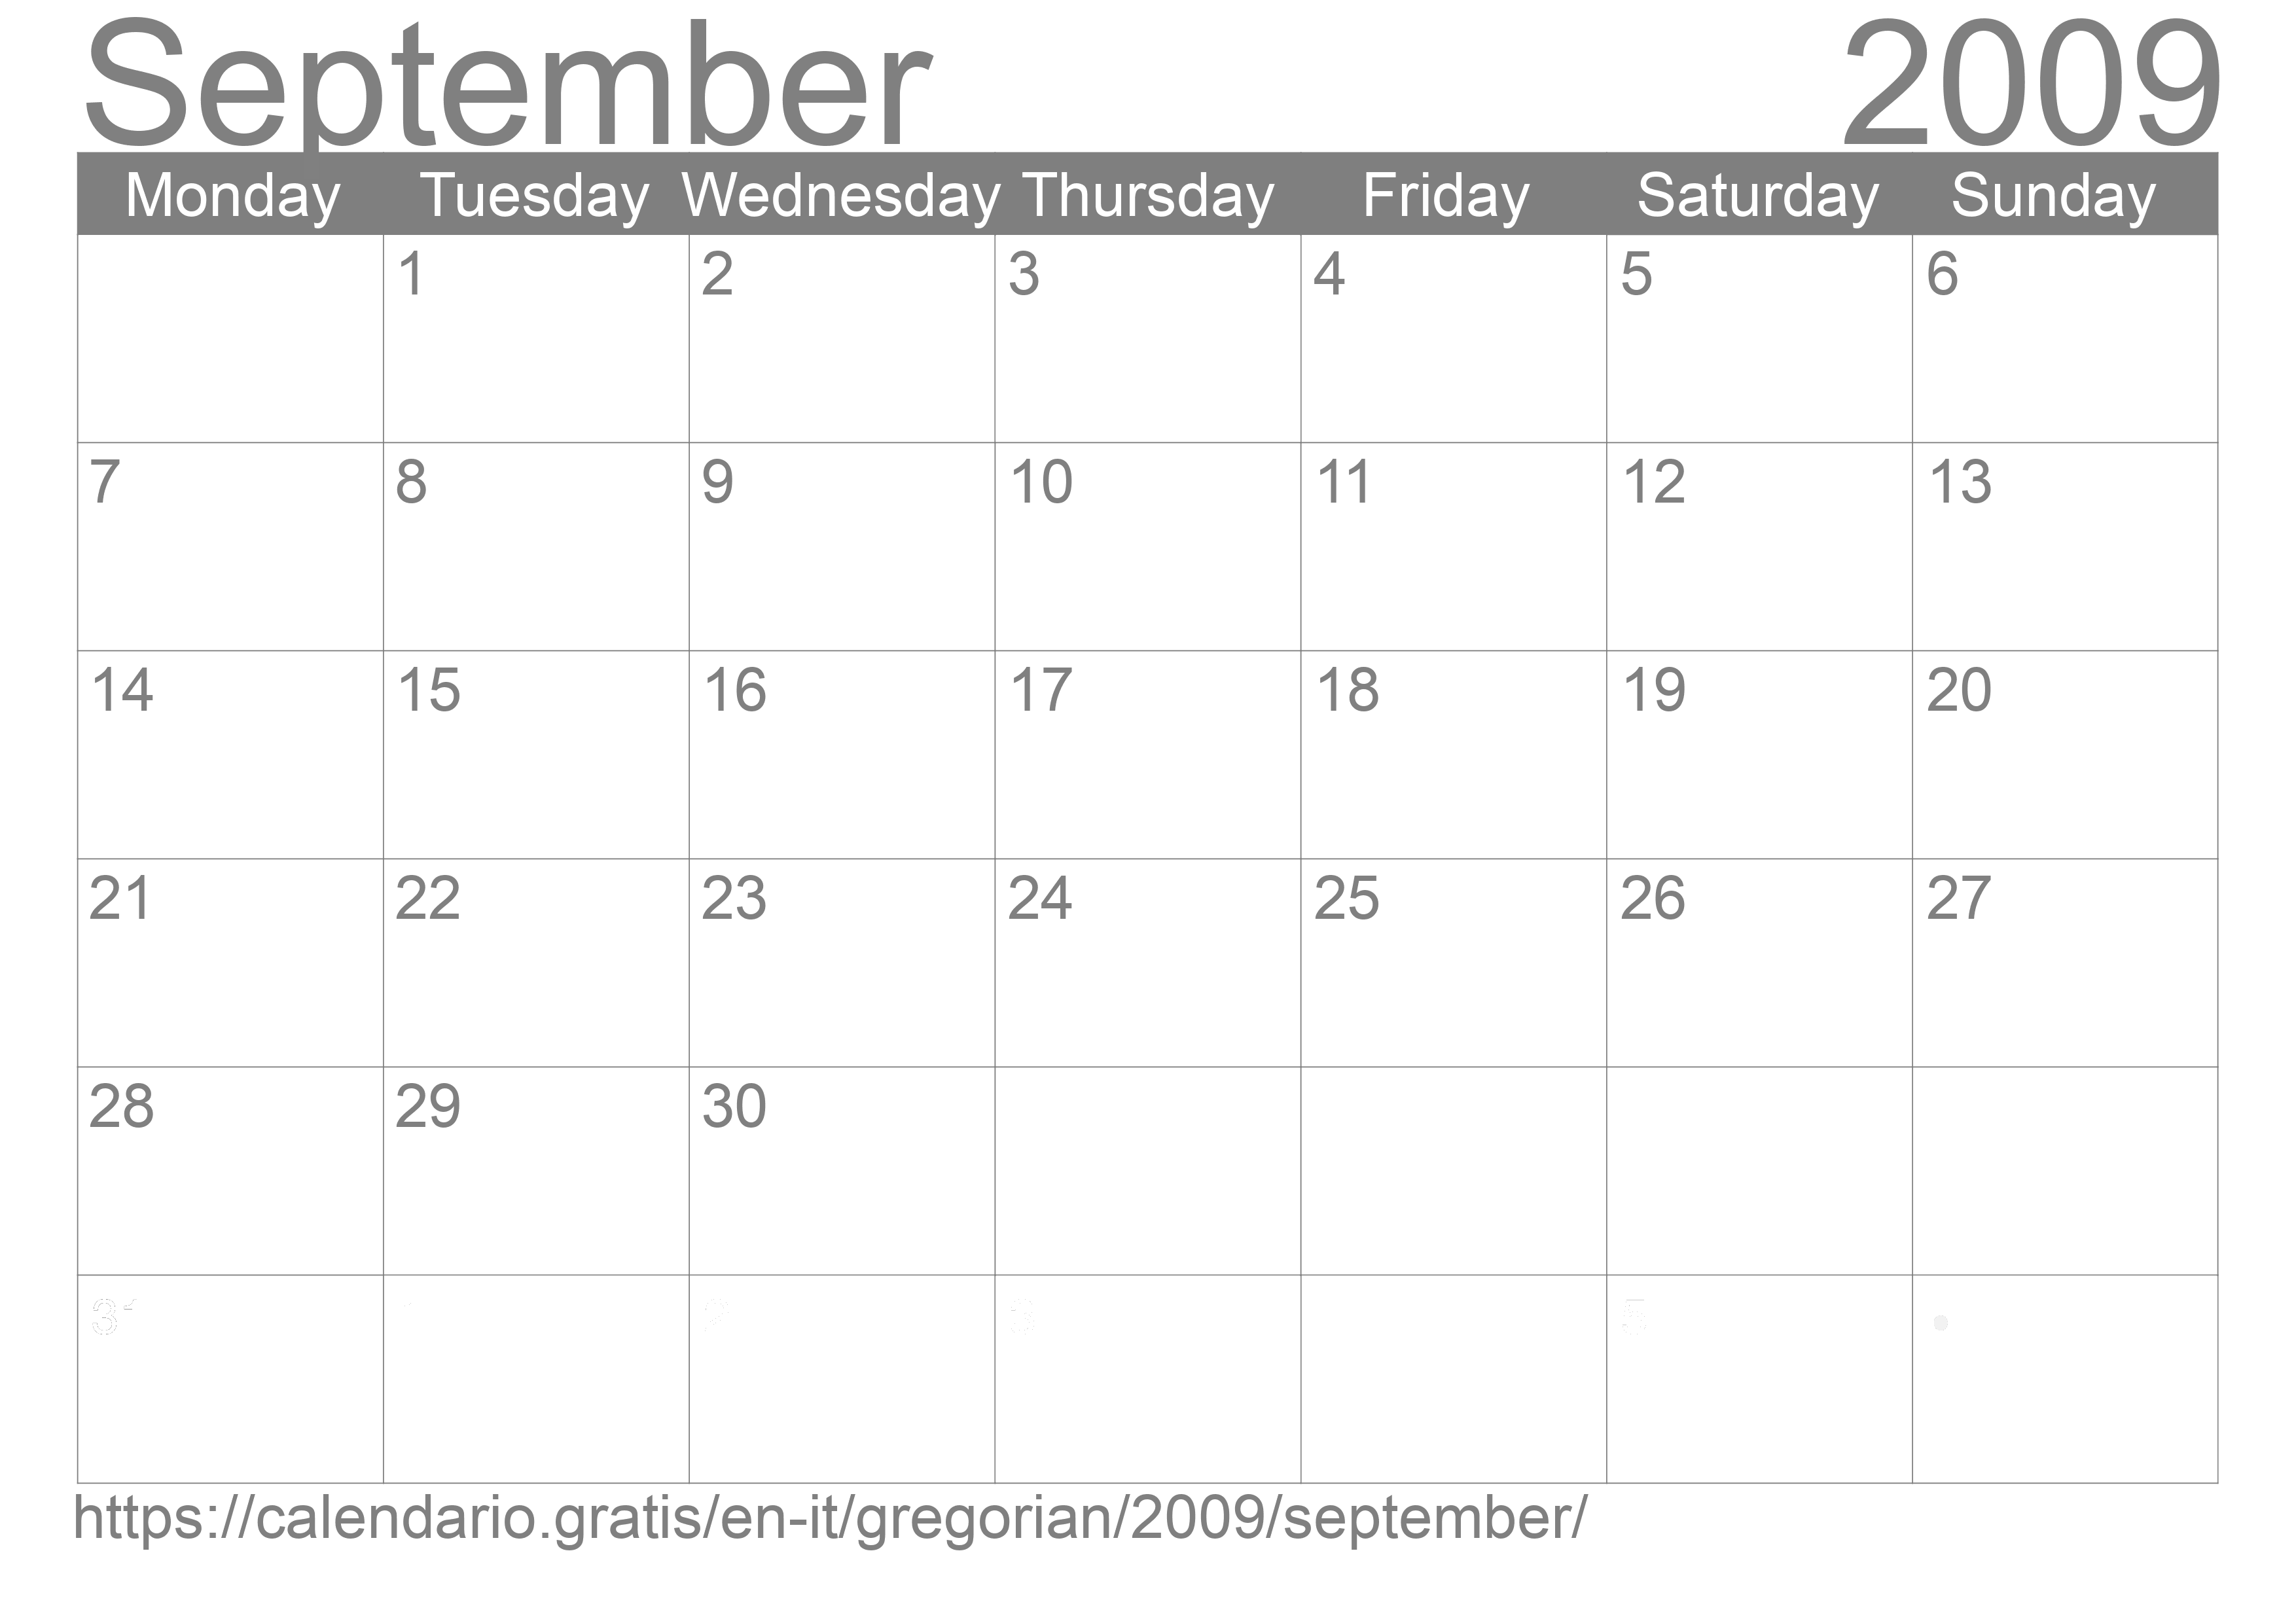 Calendar September 2009 to print